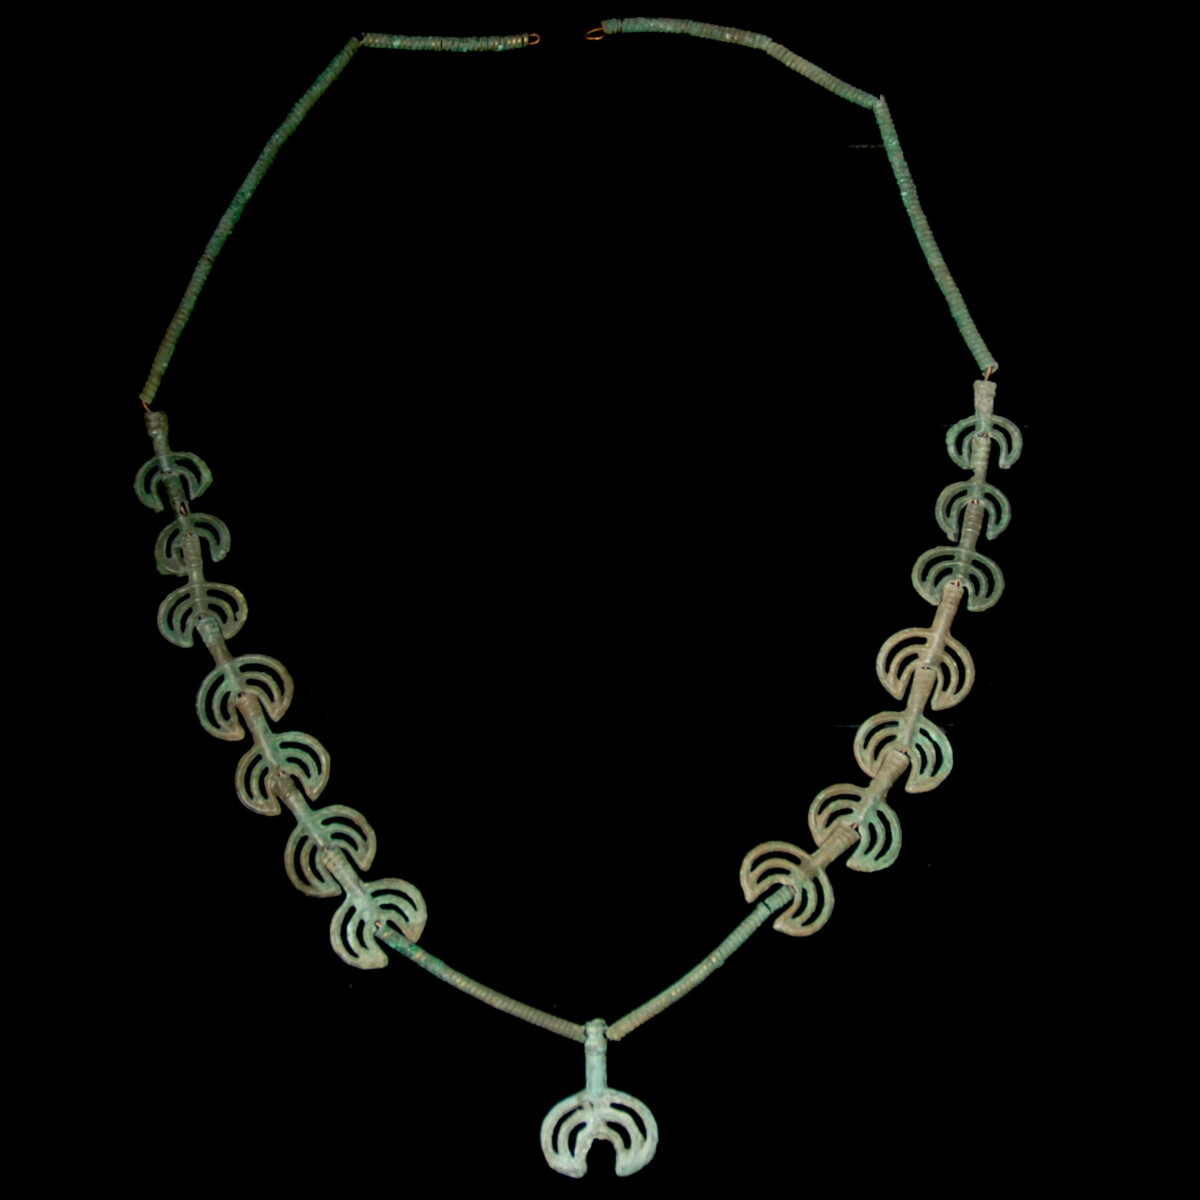 Bronze age necklace